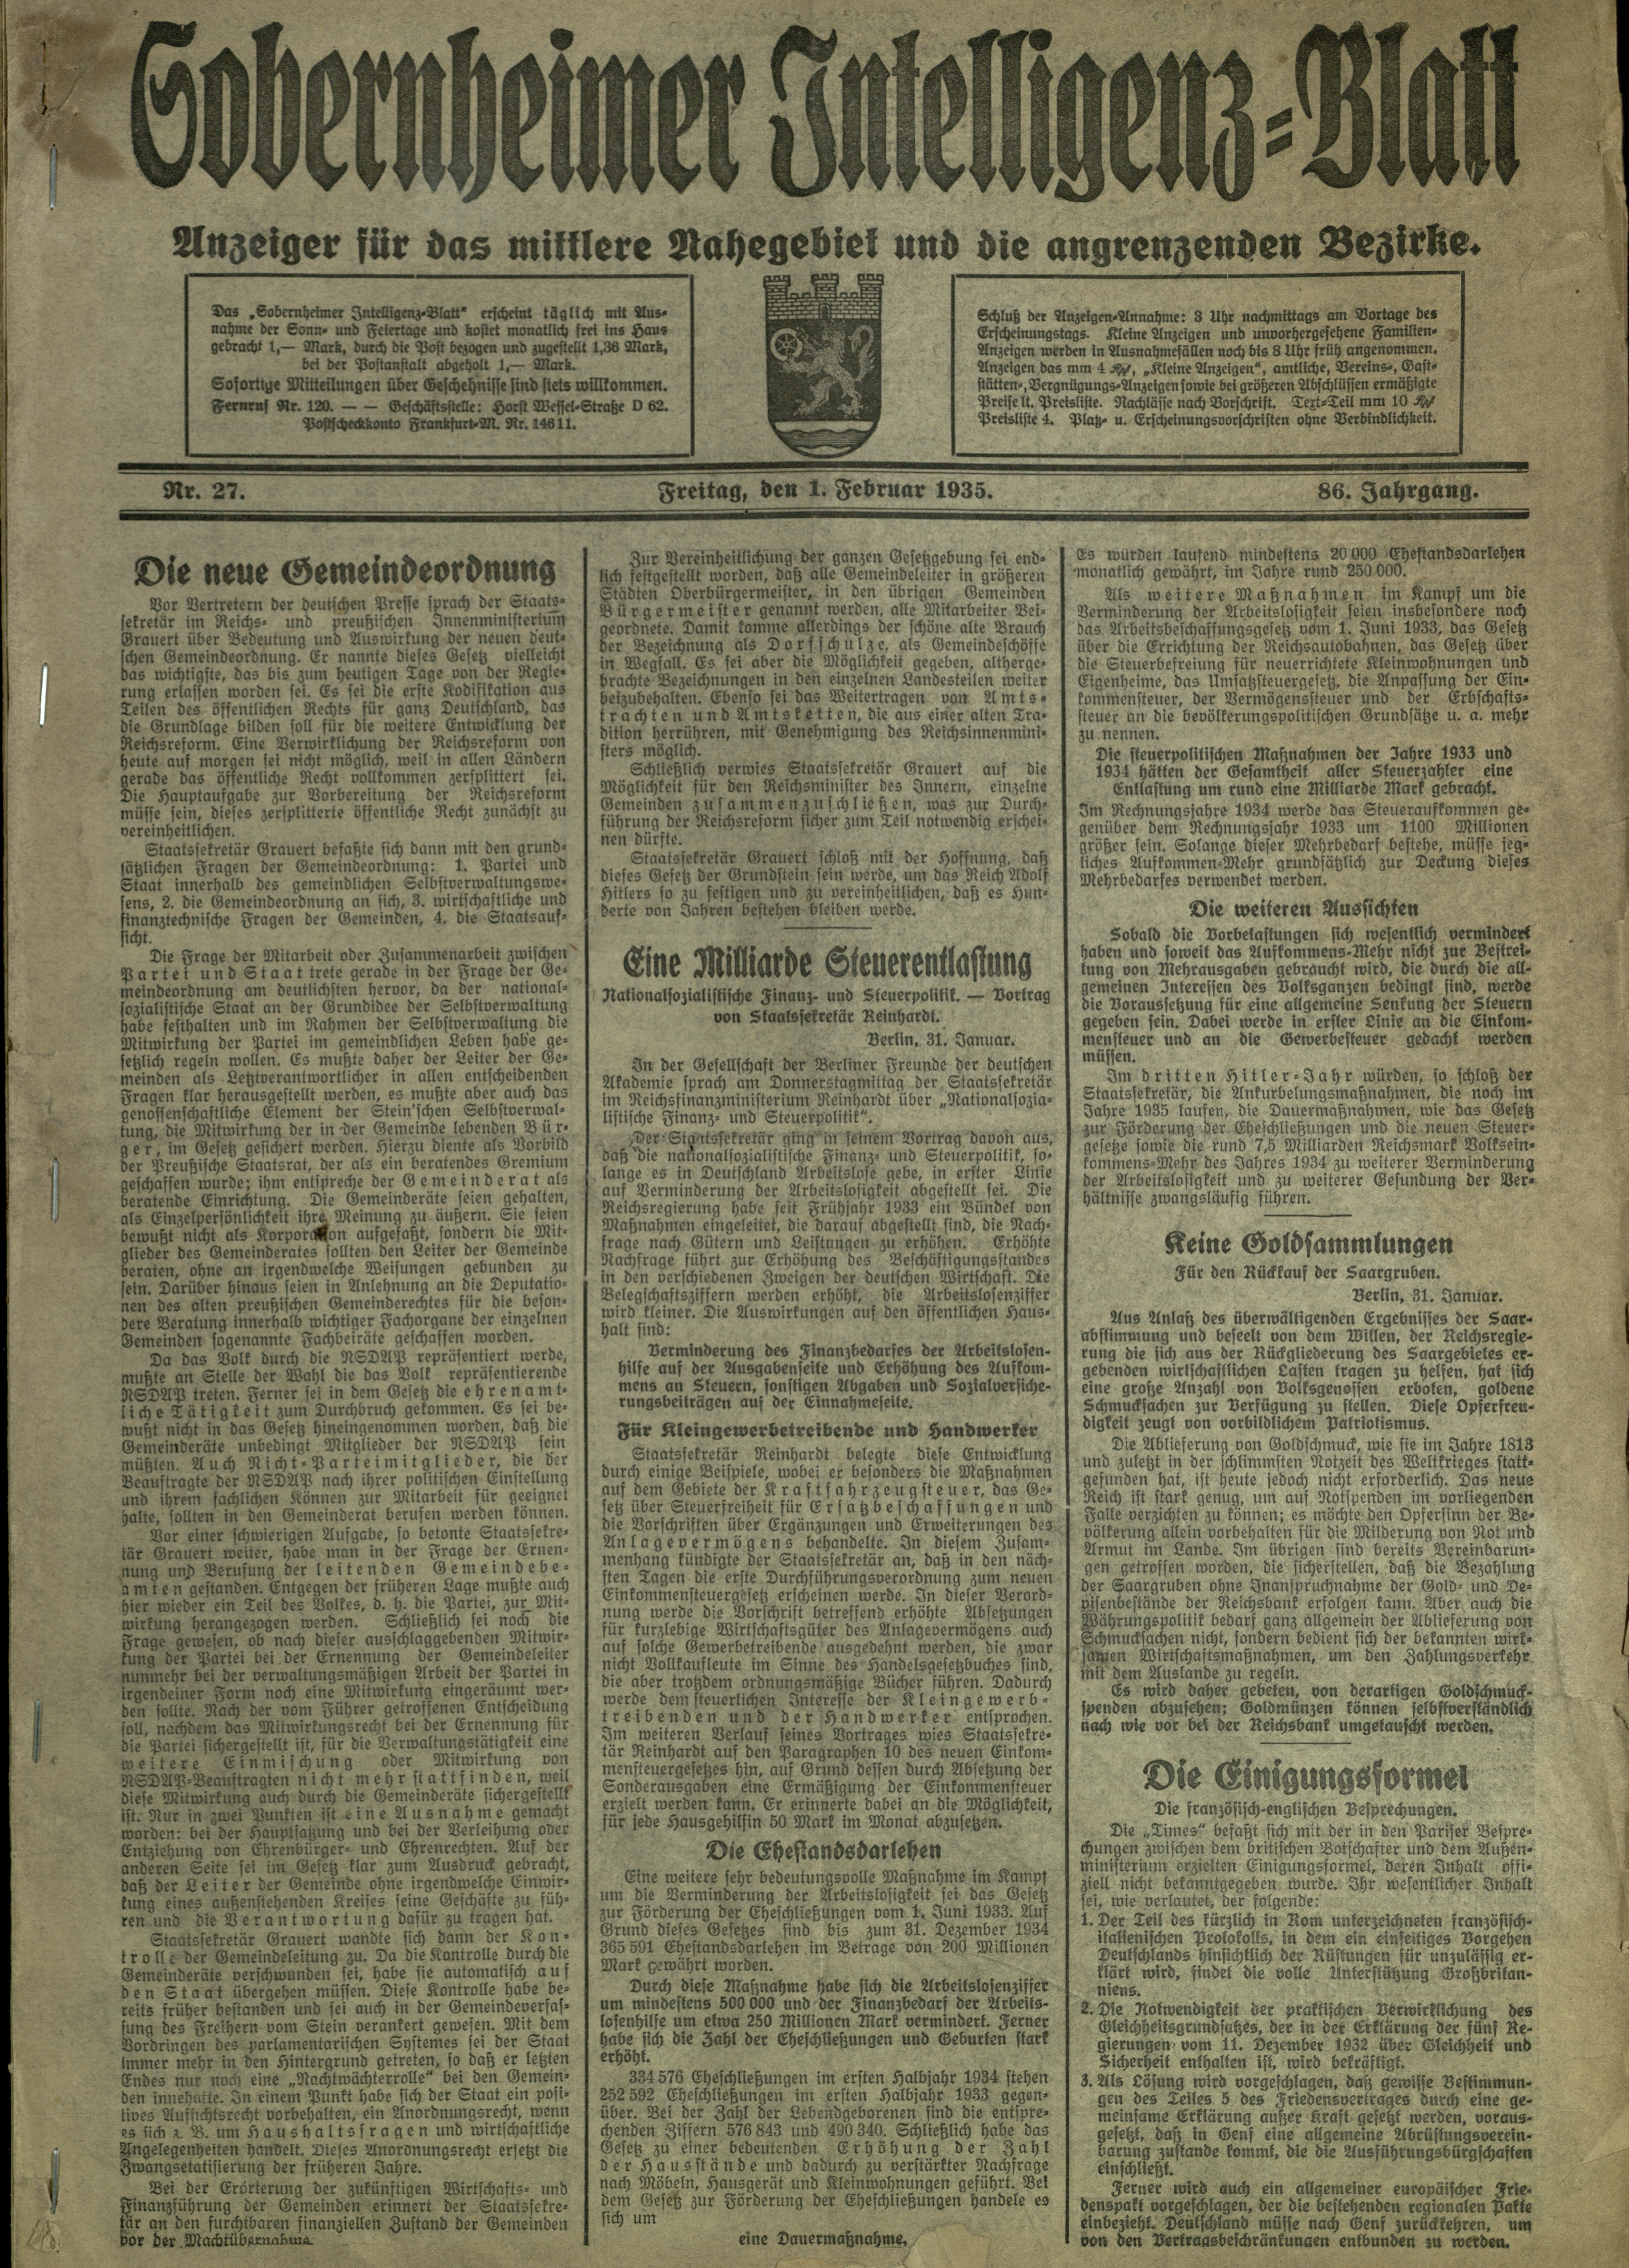 Zeitung: Sobernheimer Intelligenzblatt; Februar 1935, Jg. 86 Nr. 27 (Heimatmuseum Bad Sobernheim CC BY-NC-SA)